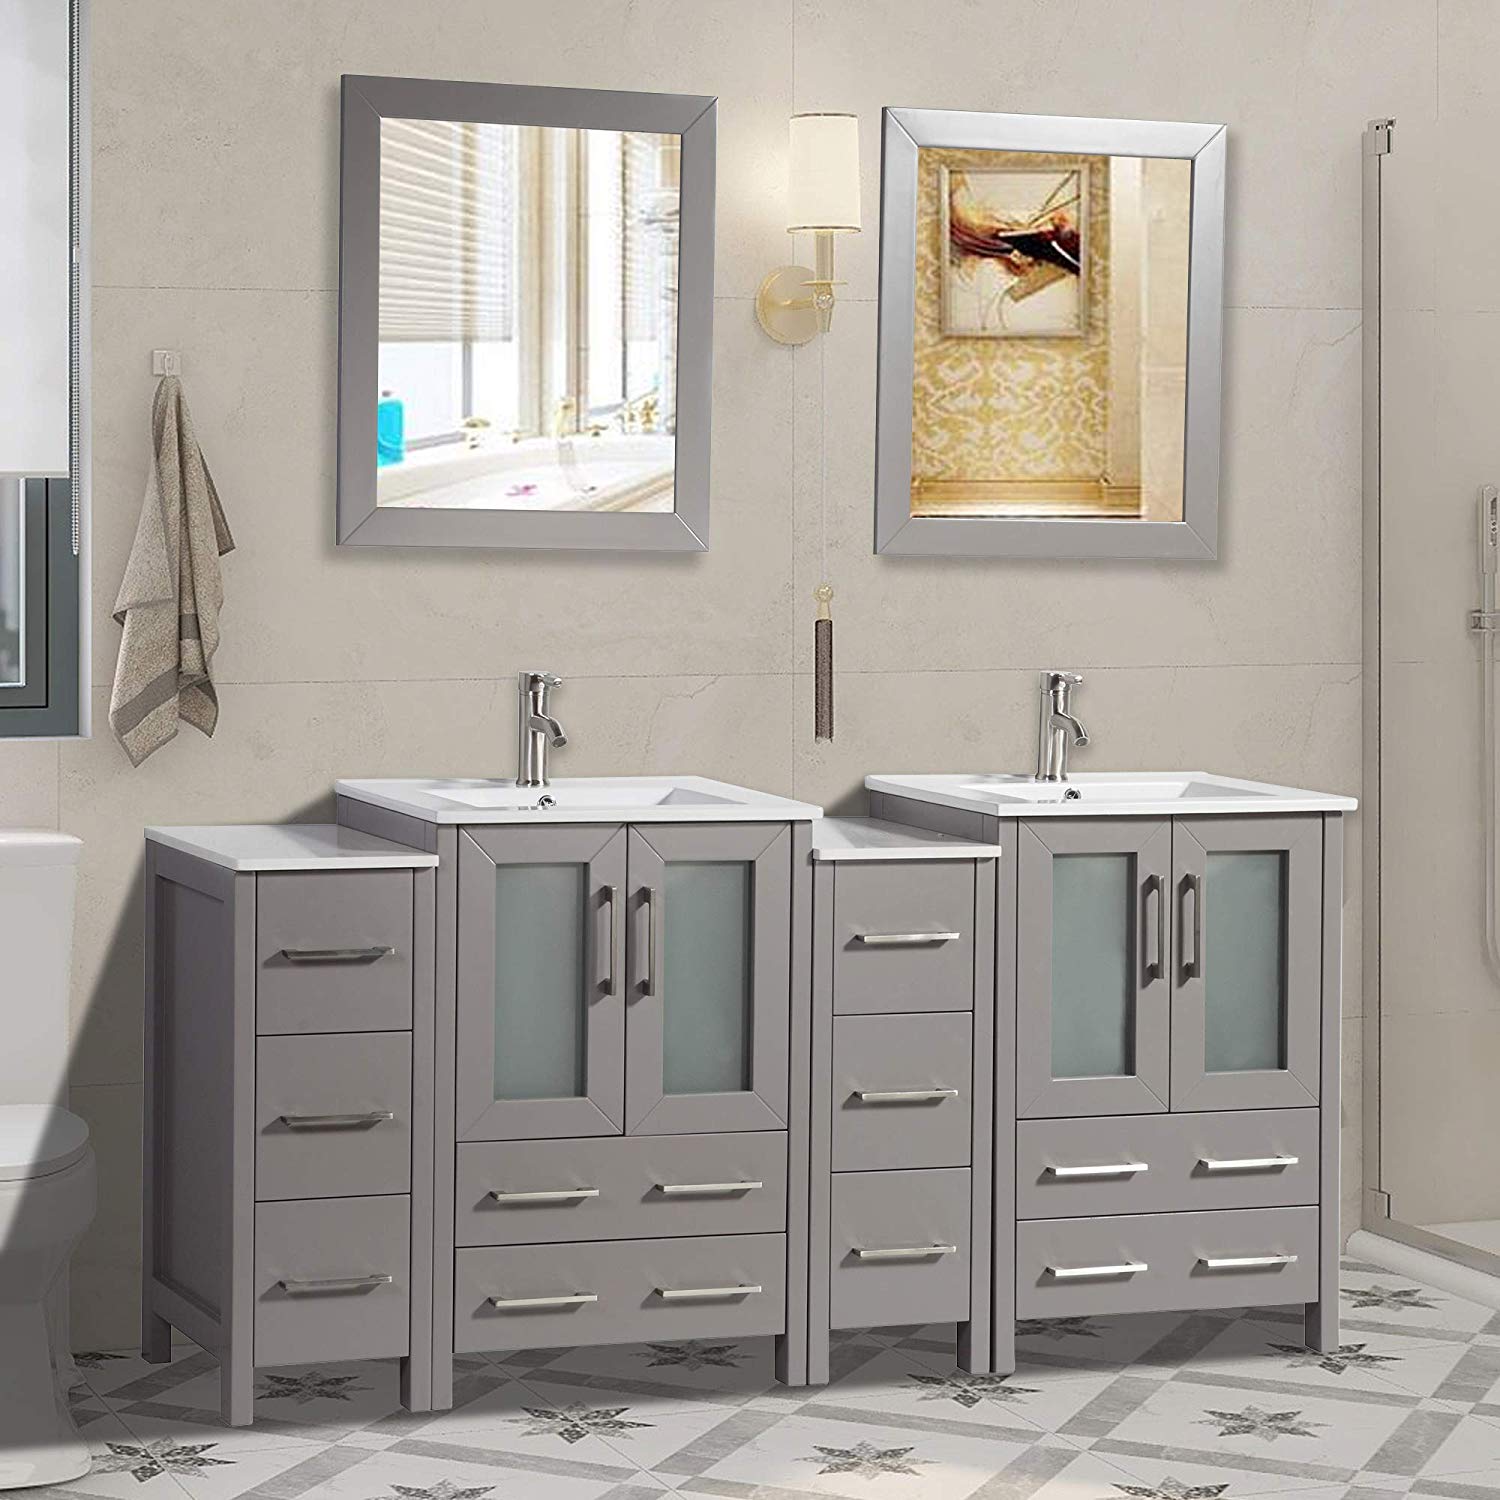 Bathroom cabinets and shelf designs